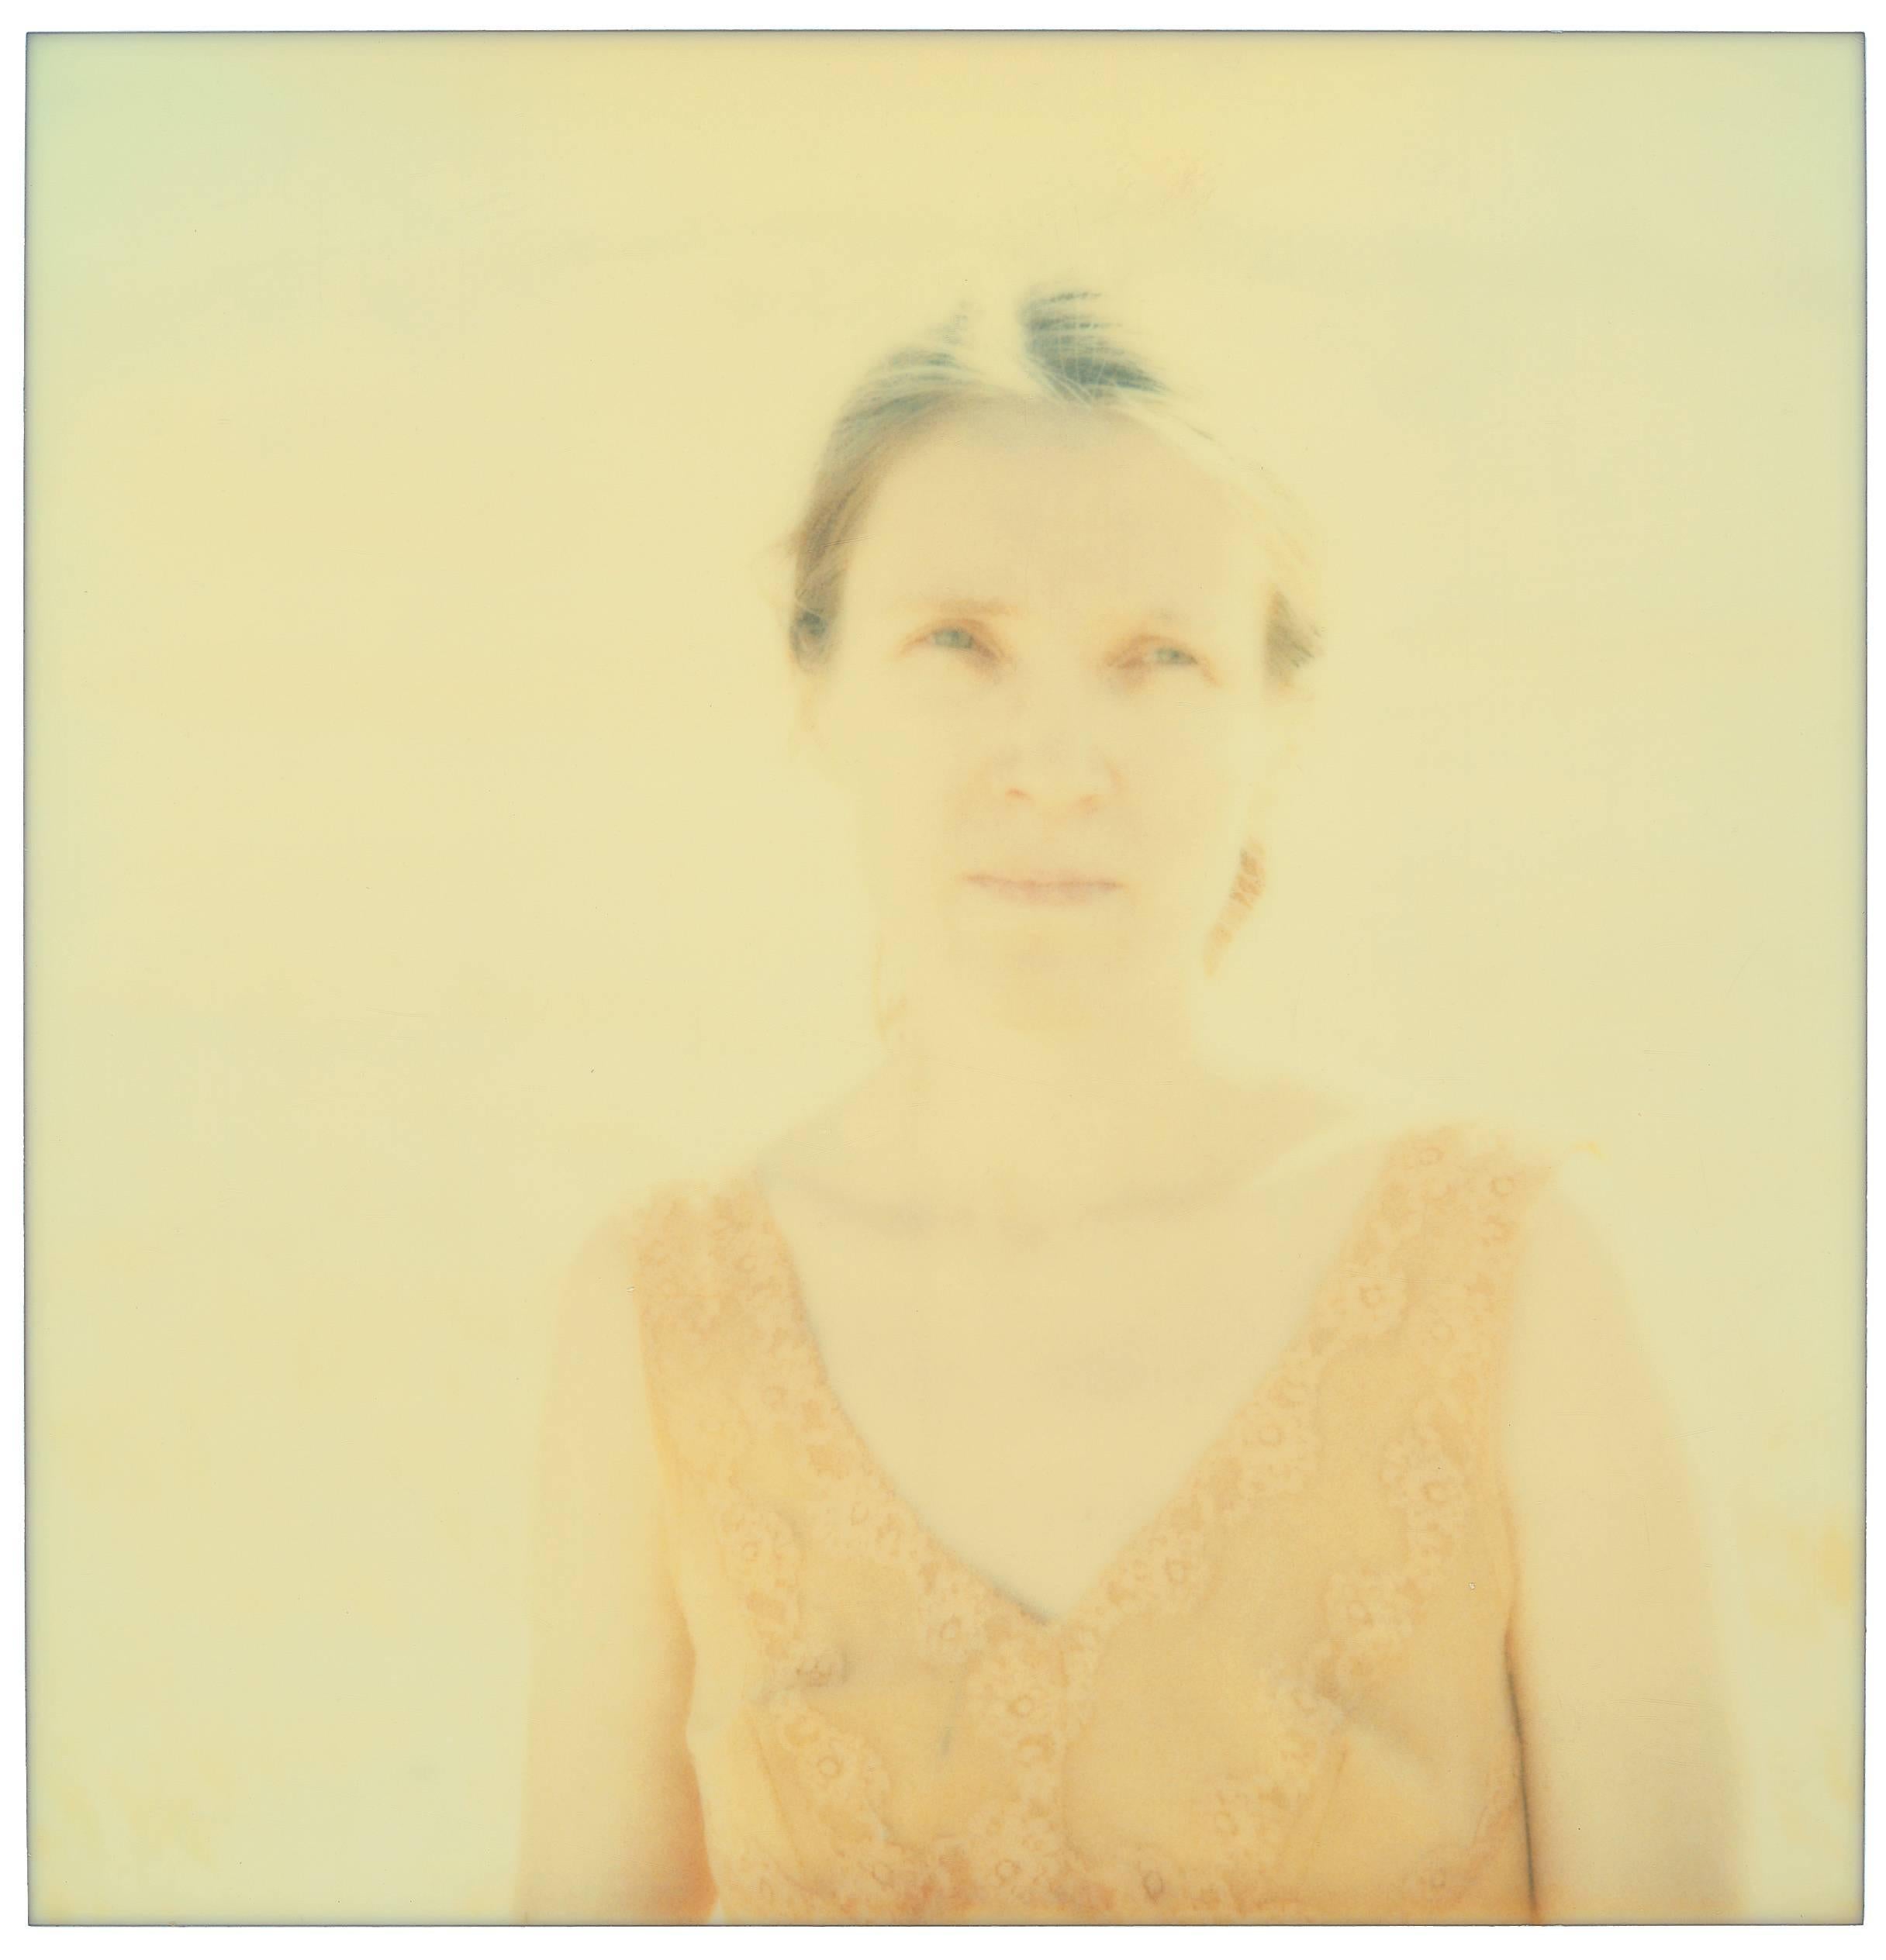 Stefanie Schneider Portrait Photograph - Oilfields I (Stranger than Paradise)